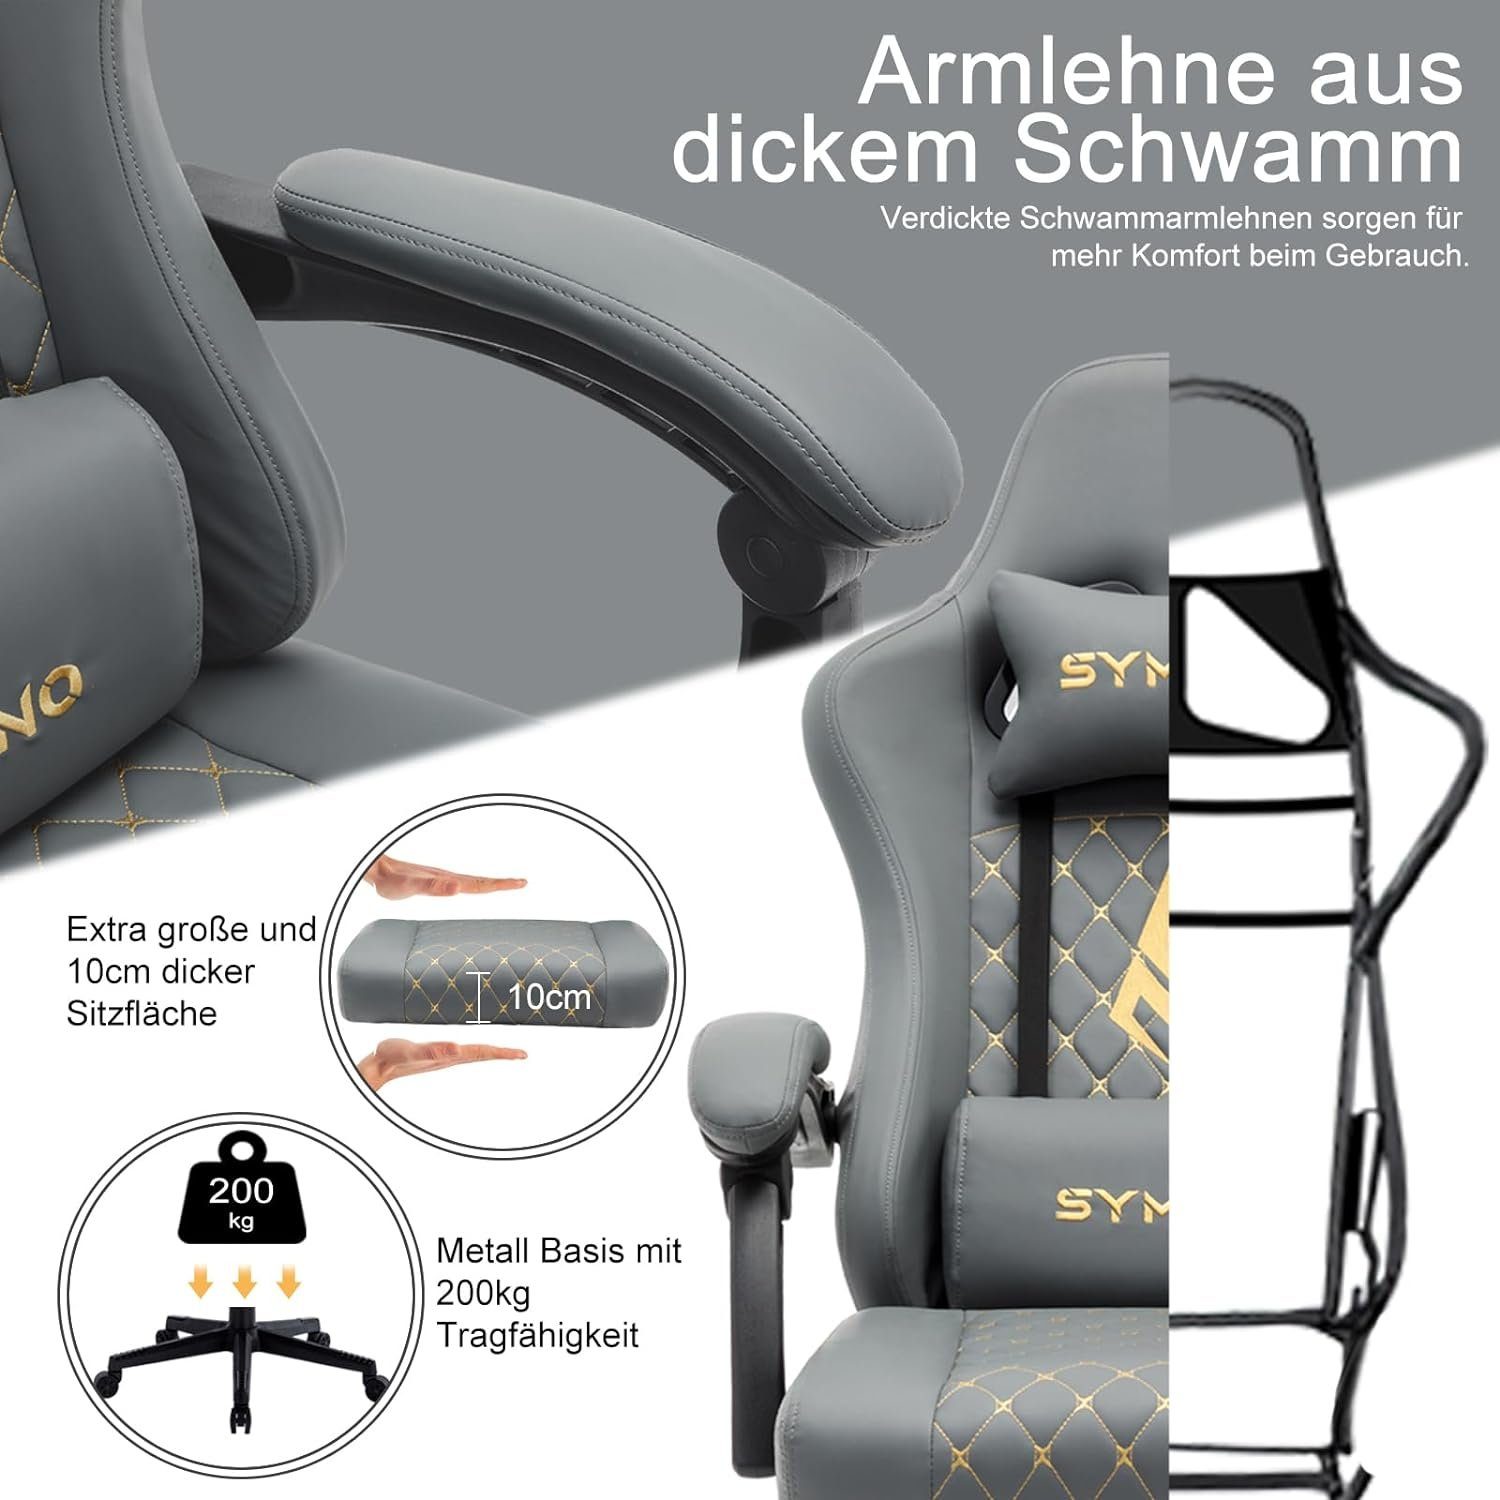 bürostuhl Racing Burostuhl,Schreibtischstuhl Gaming Chair stuhl pu-leder gaming Sitz), Verstellbarer symino mit stuhl ergonomischer (Ergonomischer fußstütze